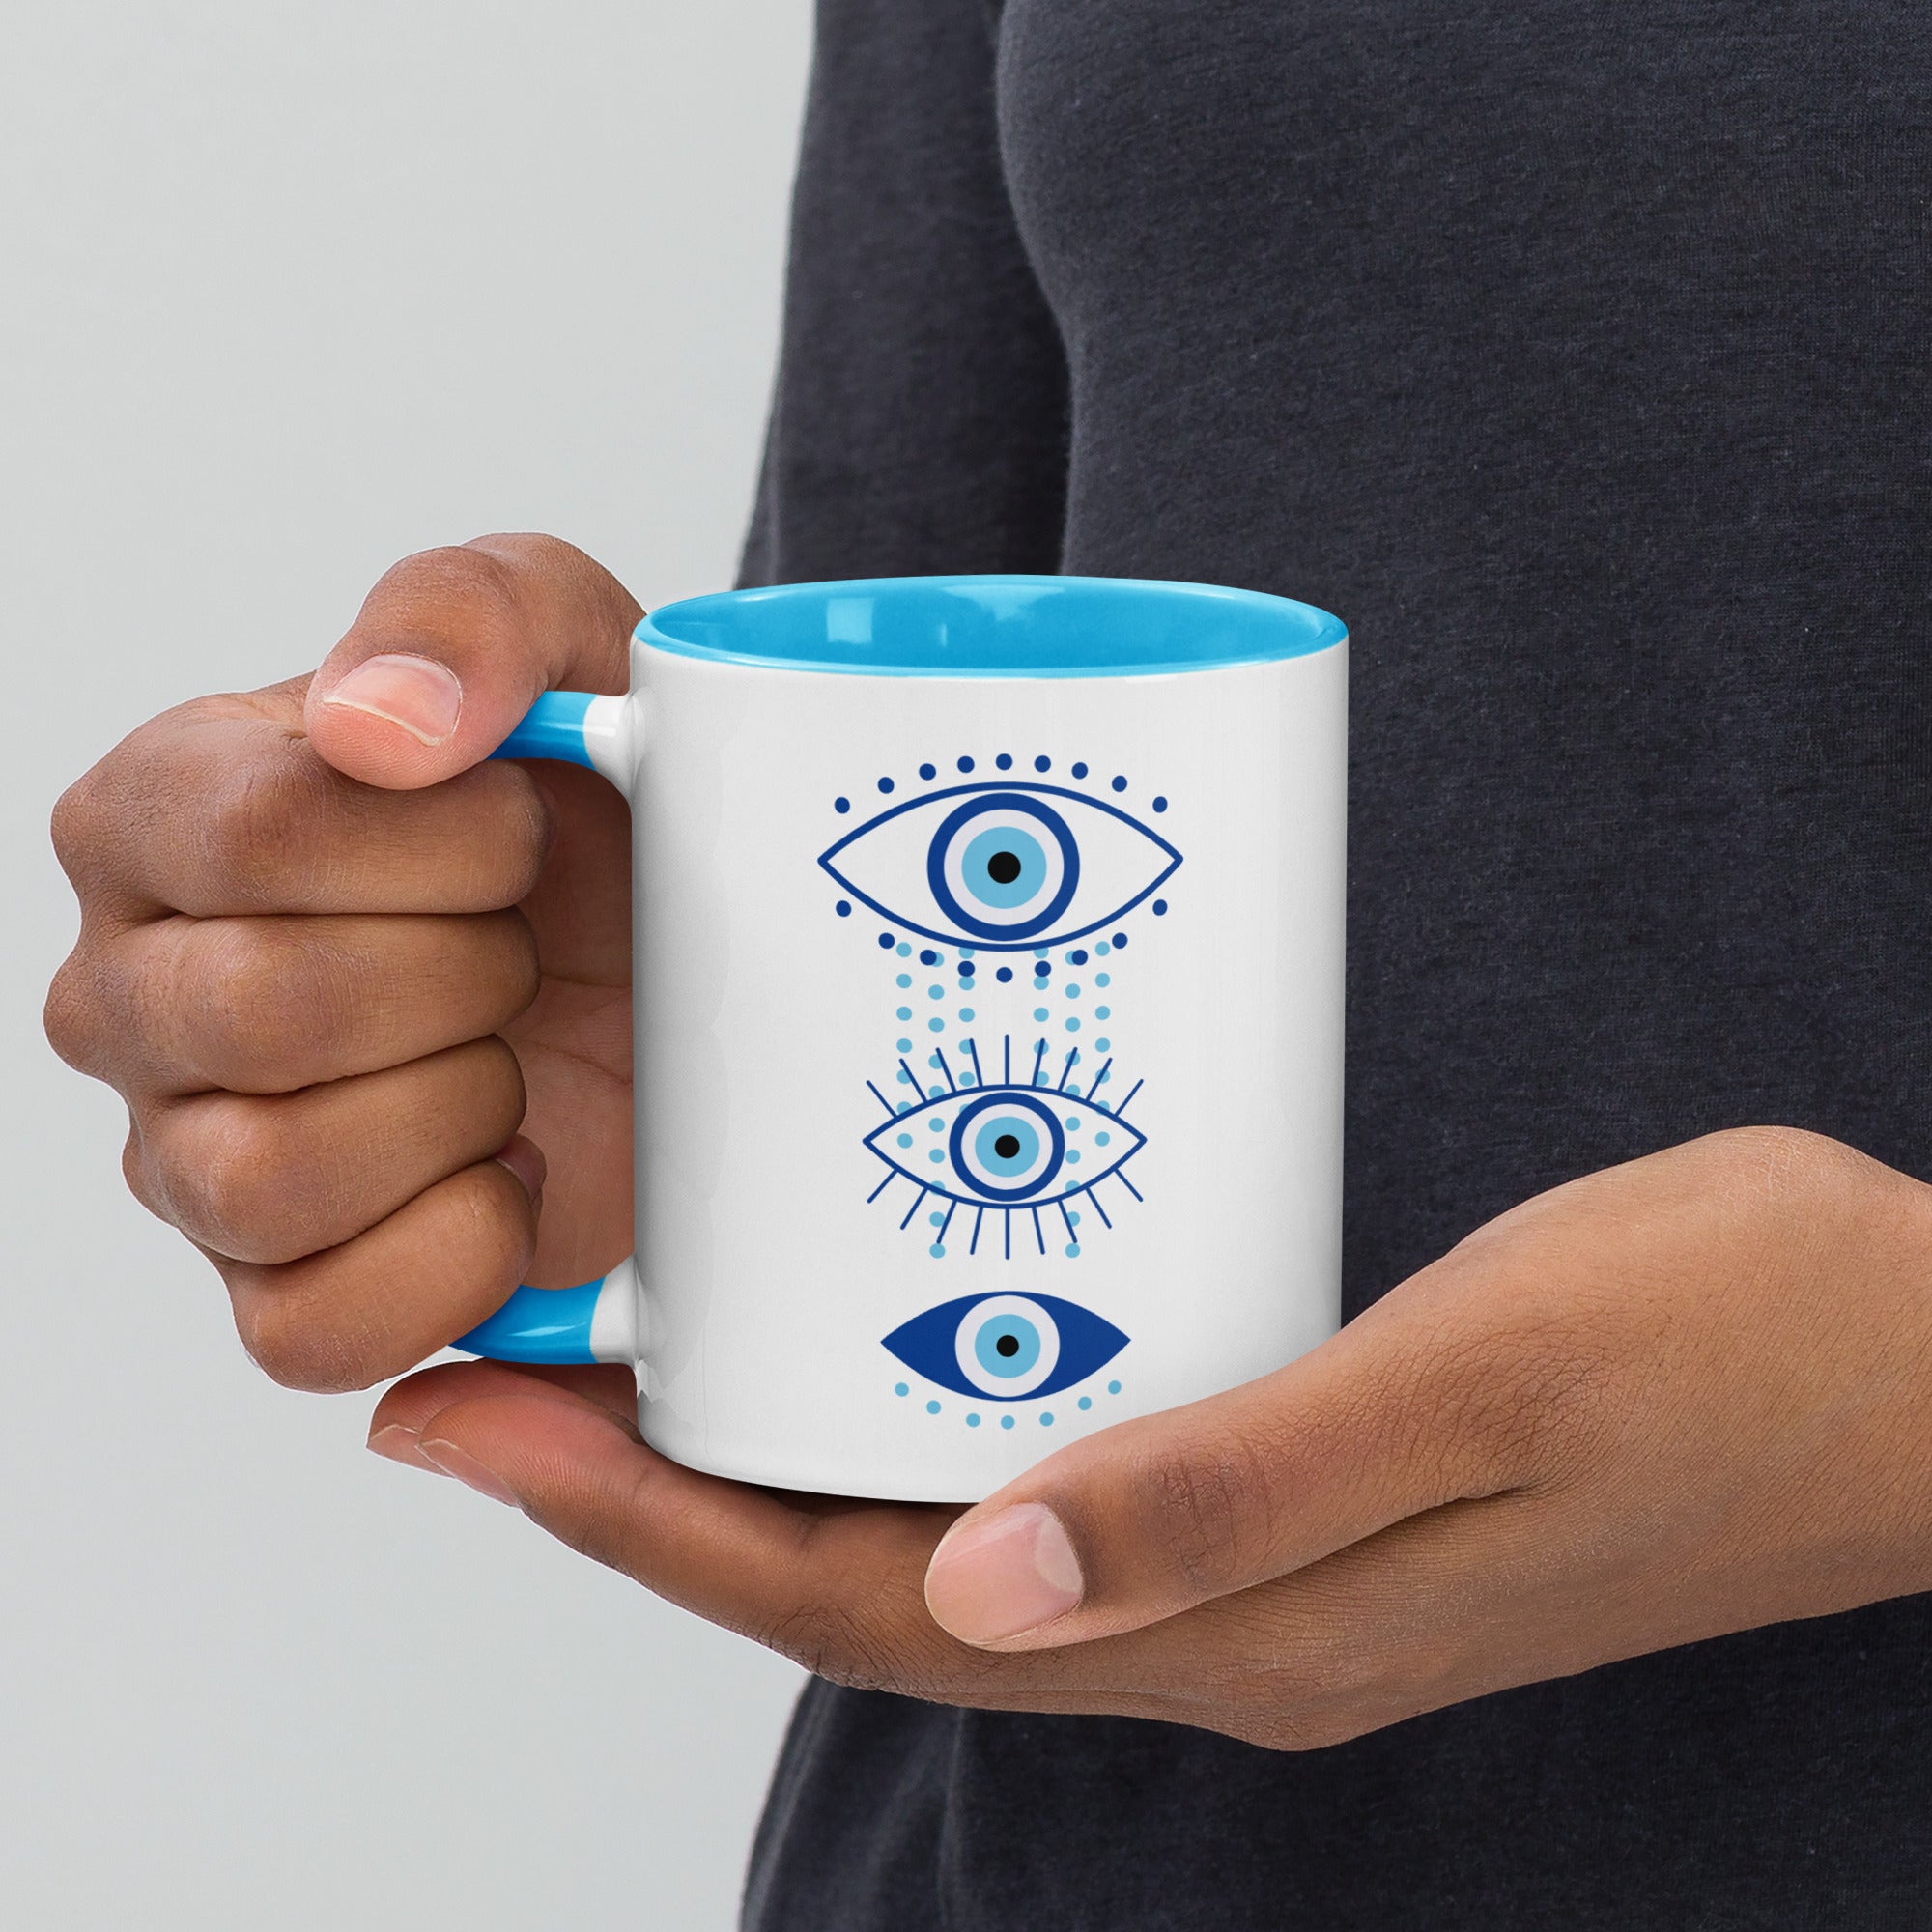 Triple Evil Eye Blue and White Ceramic Mug - Blue Color on Handle and Inside